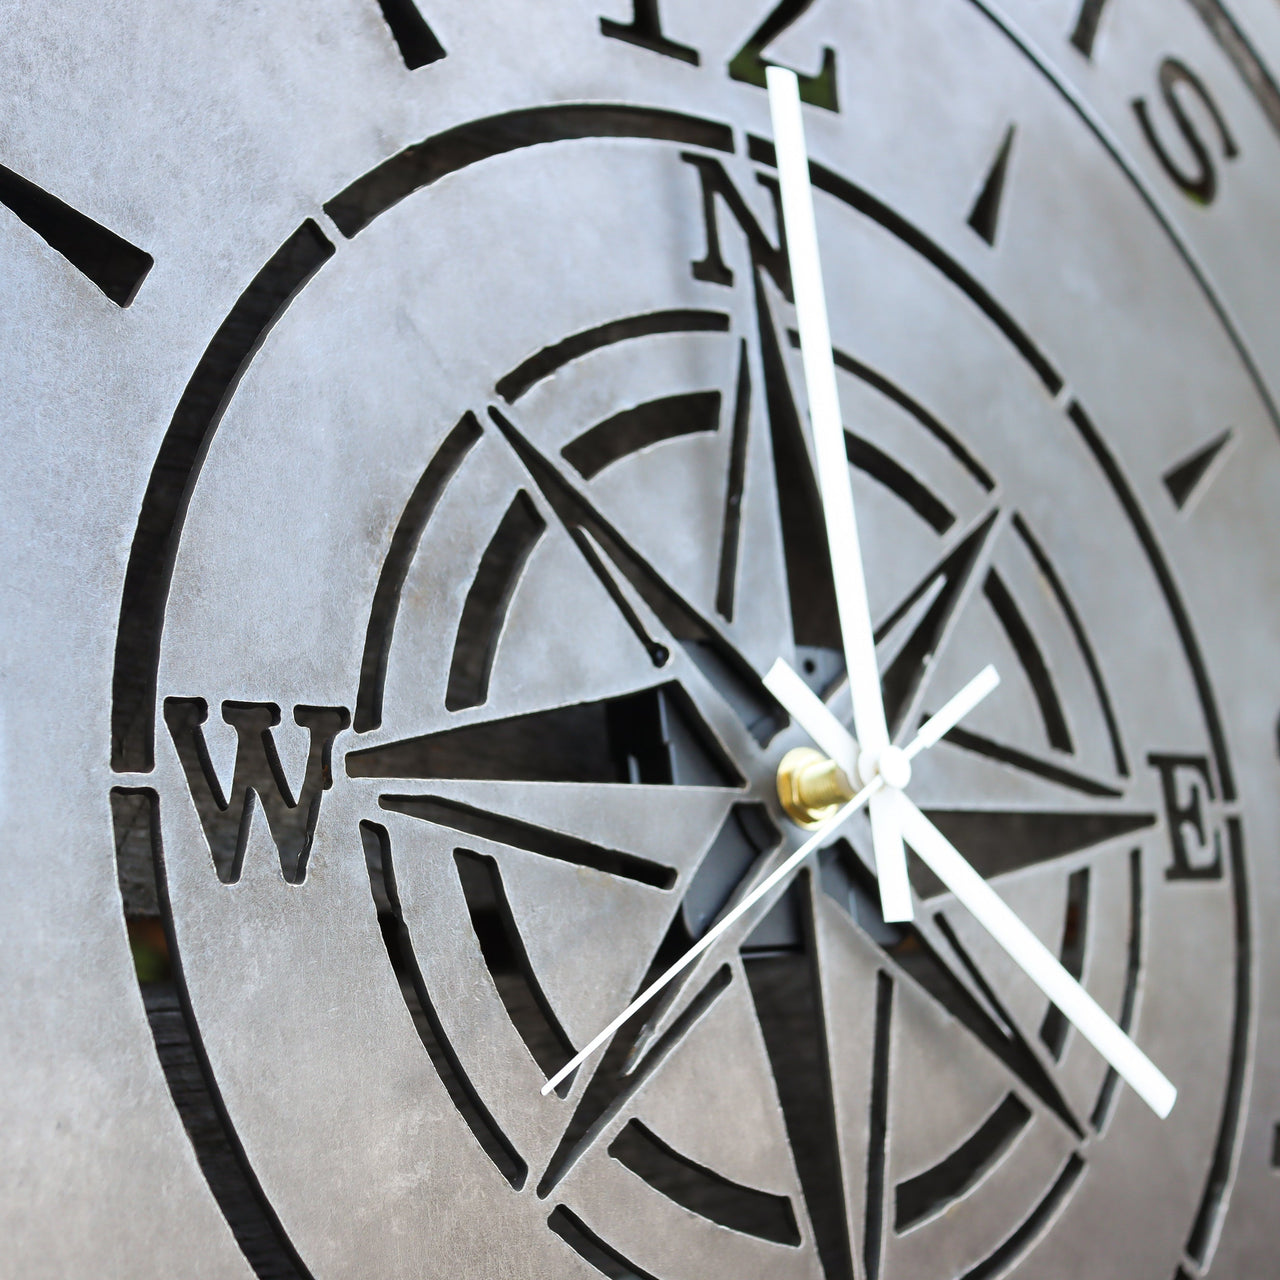 Personalized Compass Wedding Metal Clock - Rustic Nautical Home Decor  - 24" Diameter Established Date Wall Art